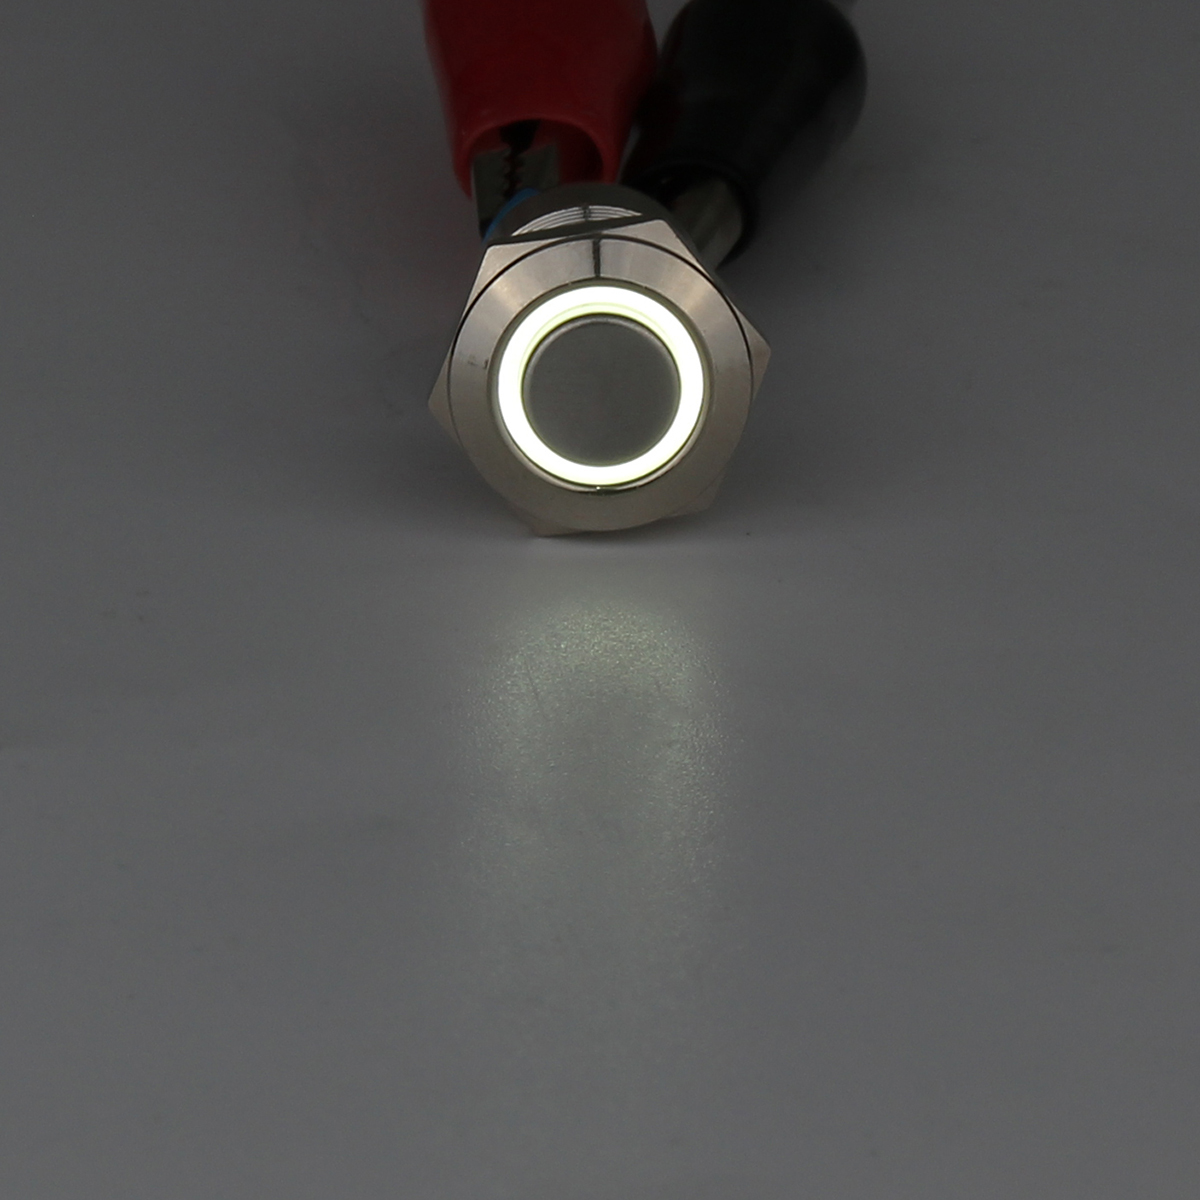 Silver-12mm-LED-Metal-Push-Button-Latching-Switch-4Pin-Waterproof-Push-Button-Switch-1175634-9